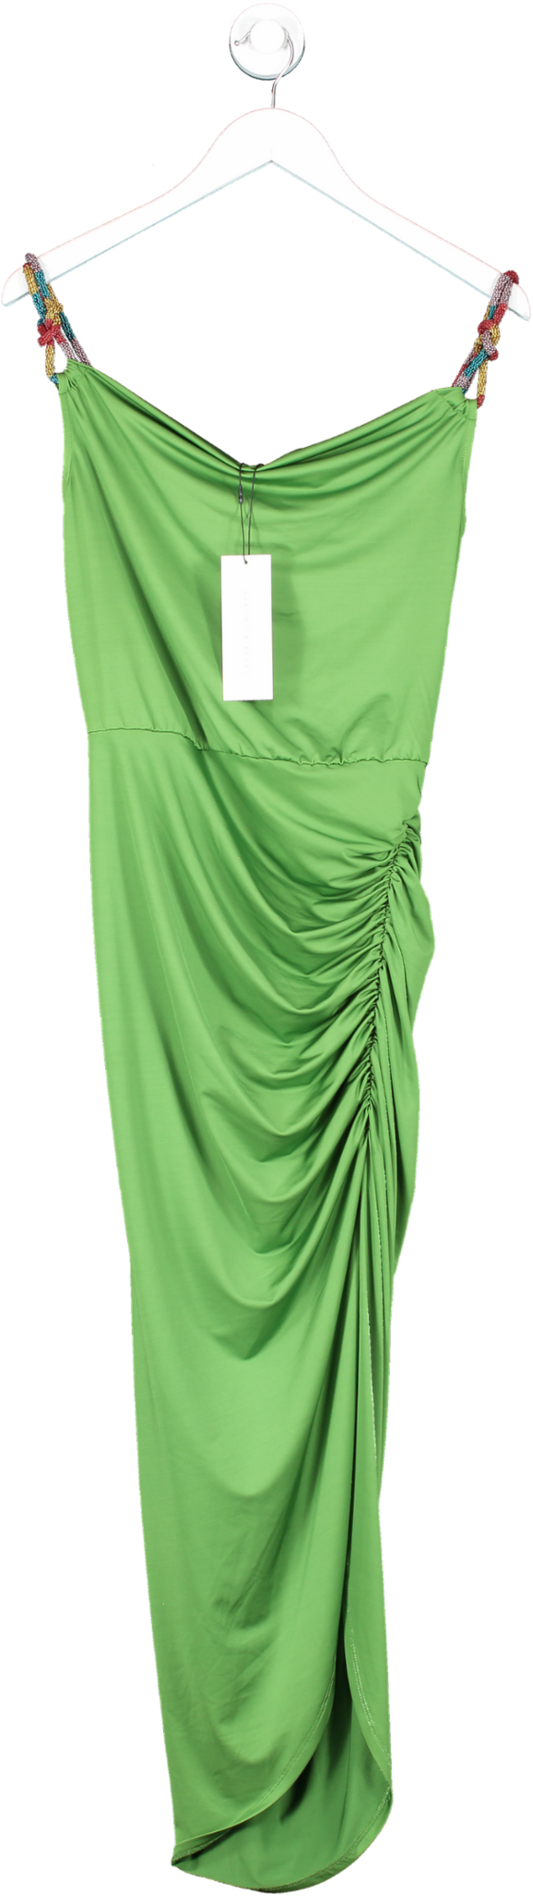 Veronica Beard Green Biava Beaded Rope Strap Dress UK XS